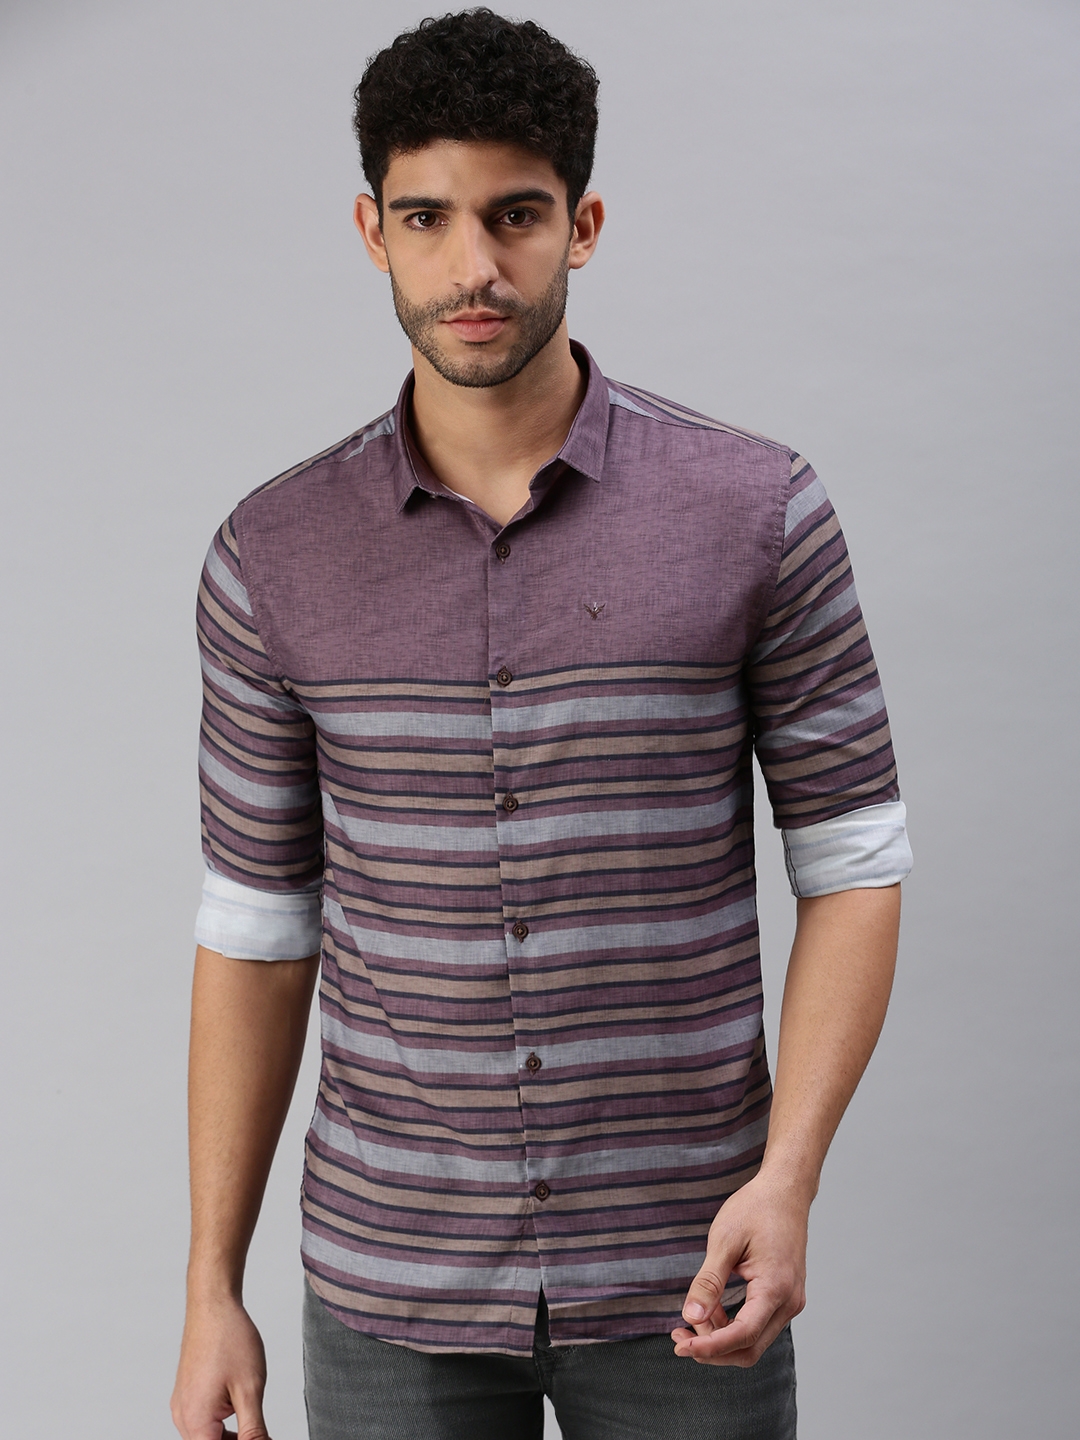 Men's Purple Cotton Striped Casual Shirts